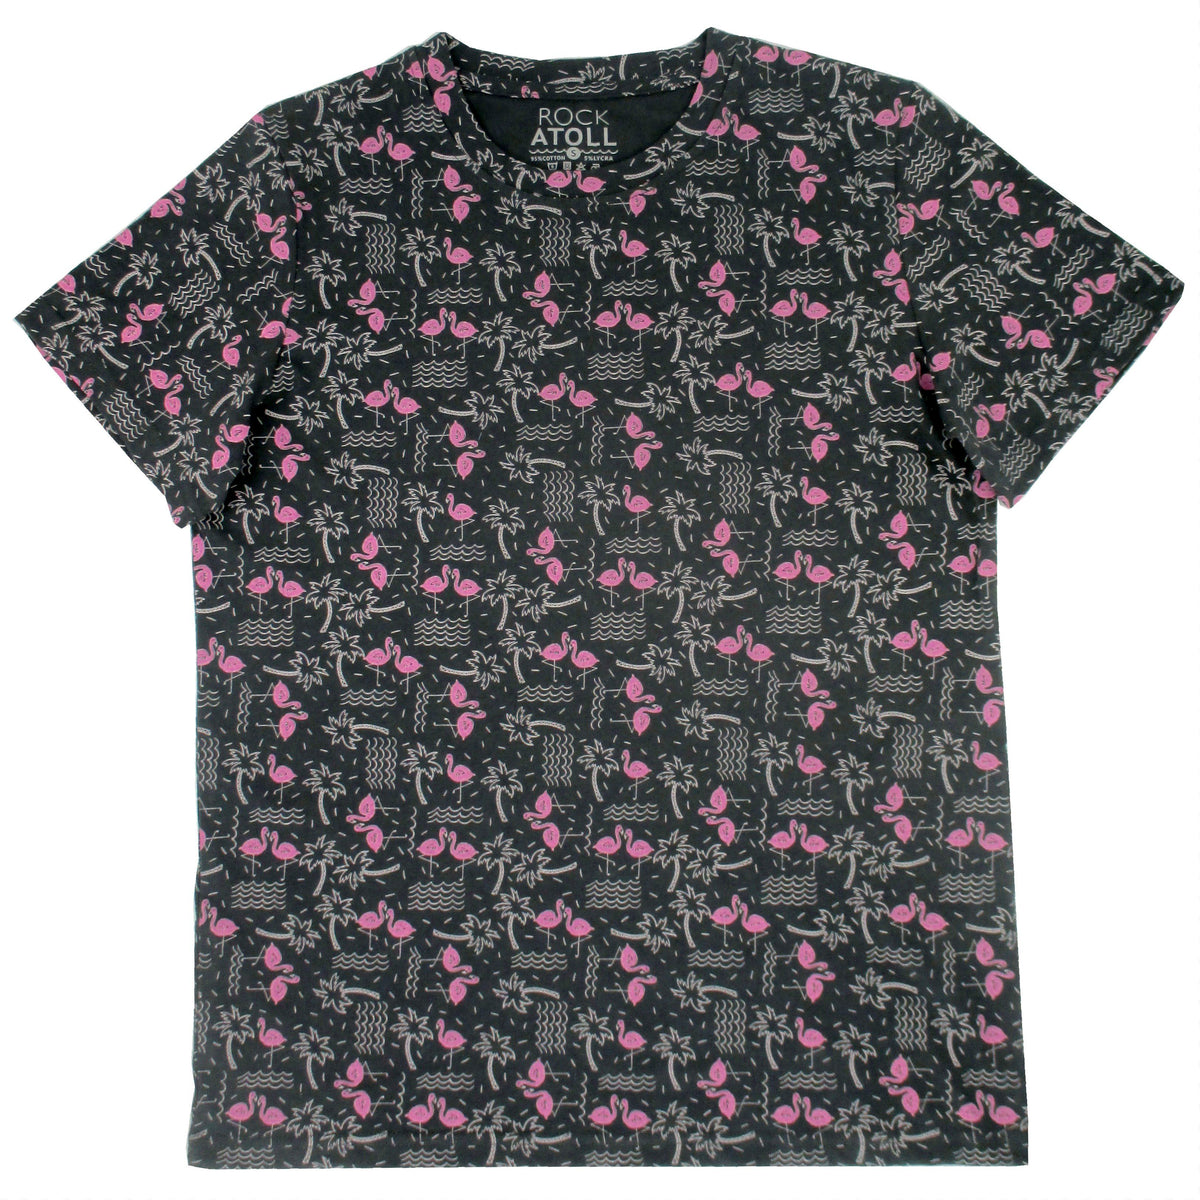 Flamingo T-Shirt For Men. Buy A Men's Pink Bird Shirt Online